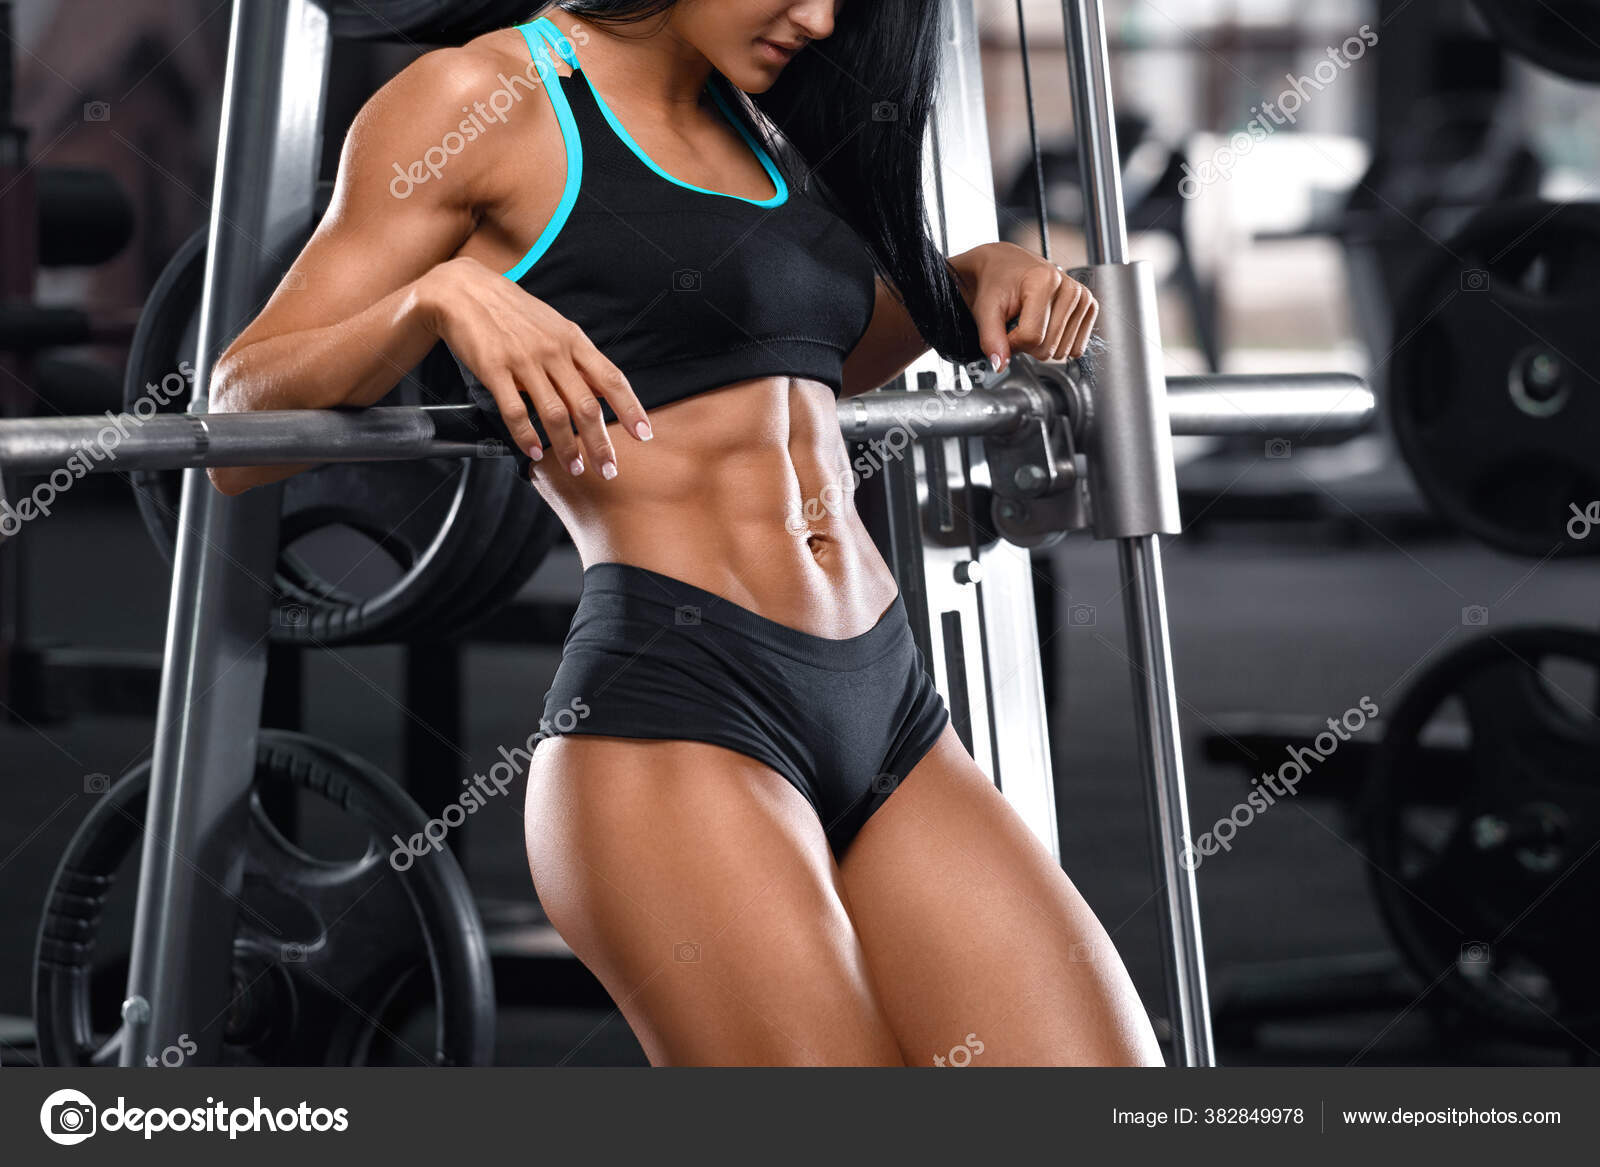 https://st4.depositphotos.com/3383955/38284/i/1600/depositphotos_382849978-stock-photo-fitness-woman-showing-abs-flat.jpg